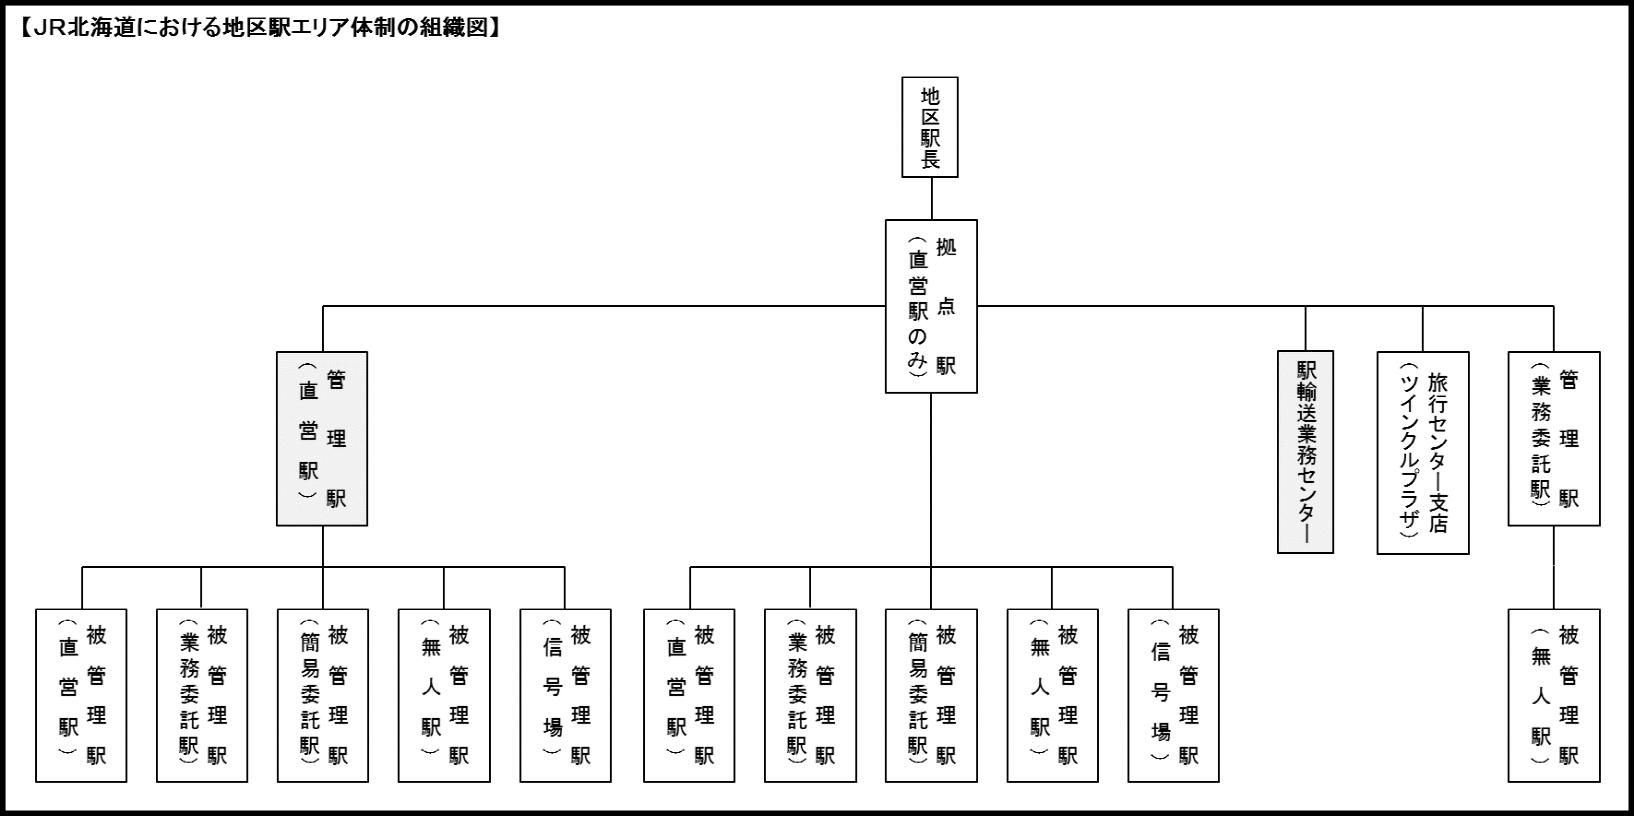 JR北海道の地区駅長制度（組織図）